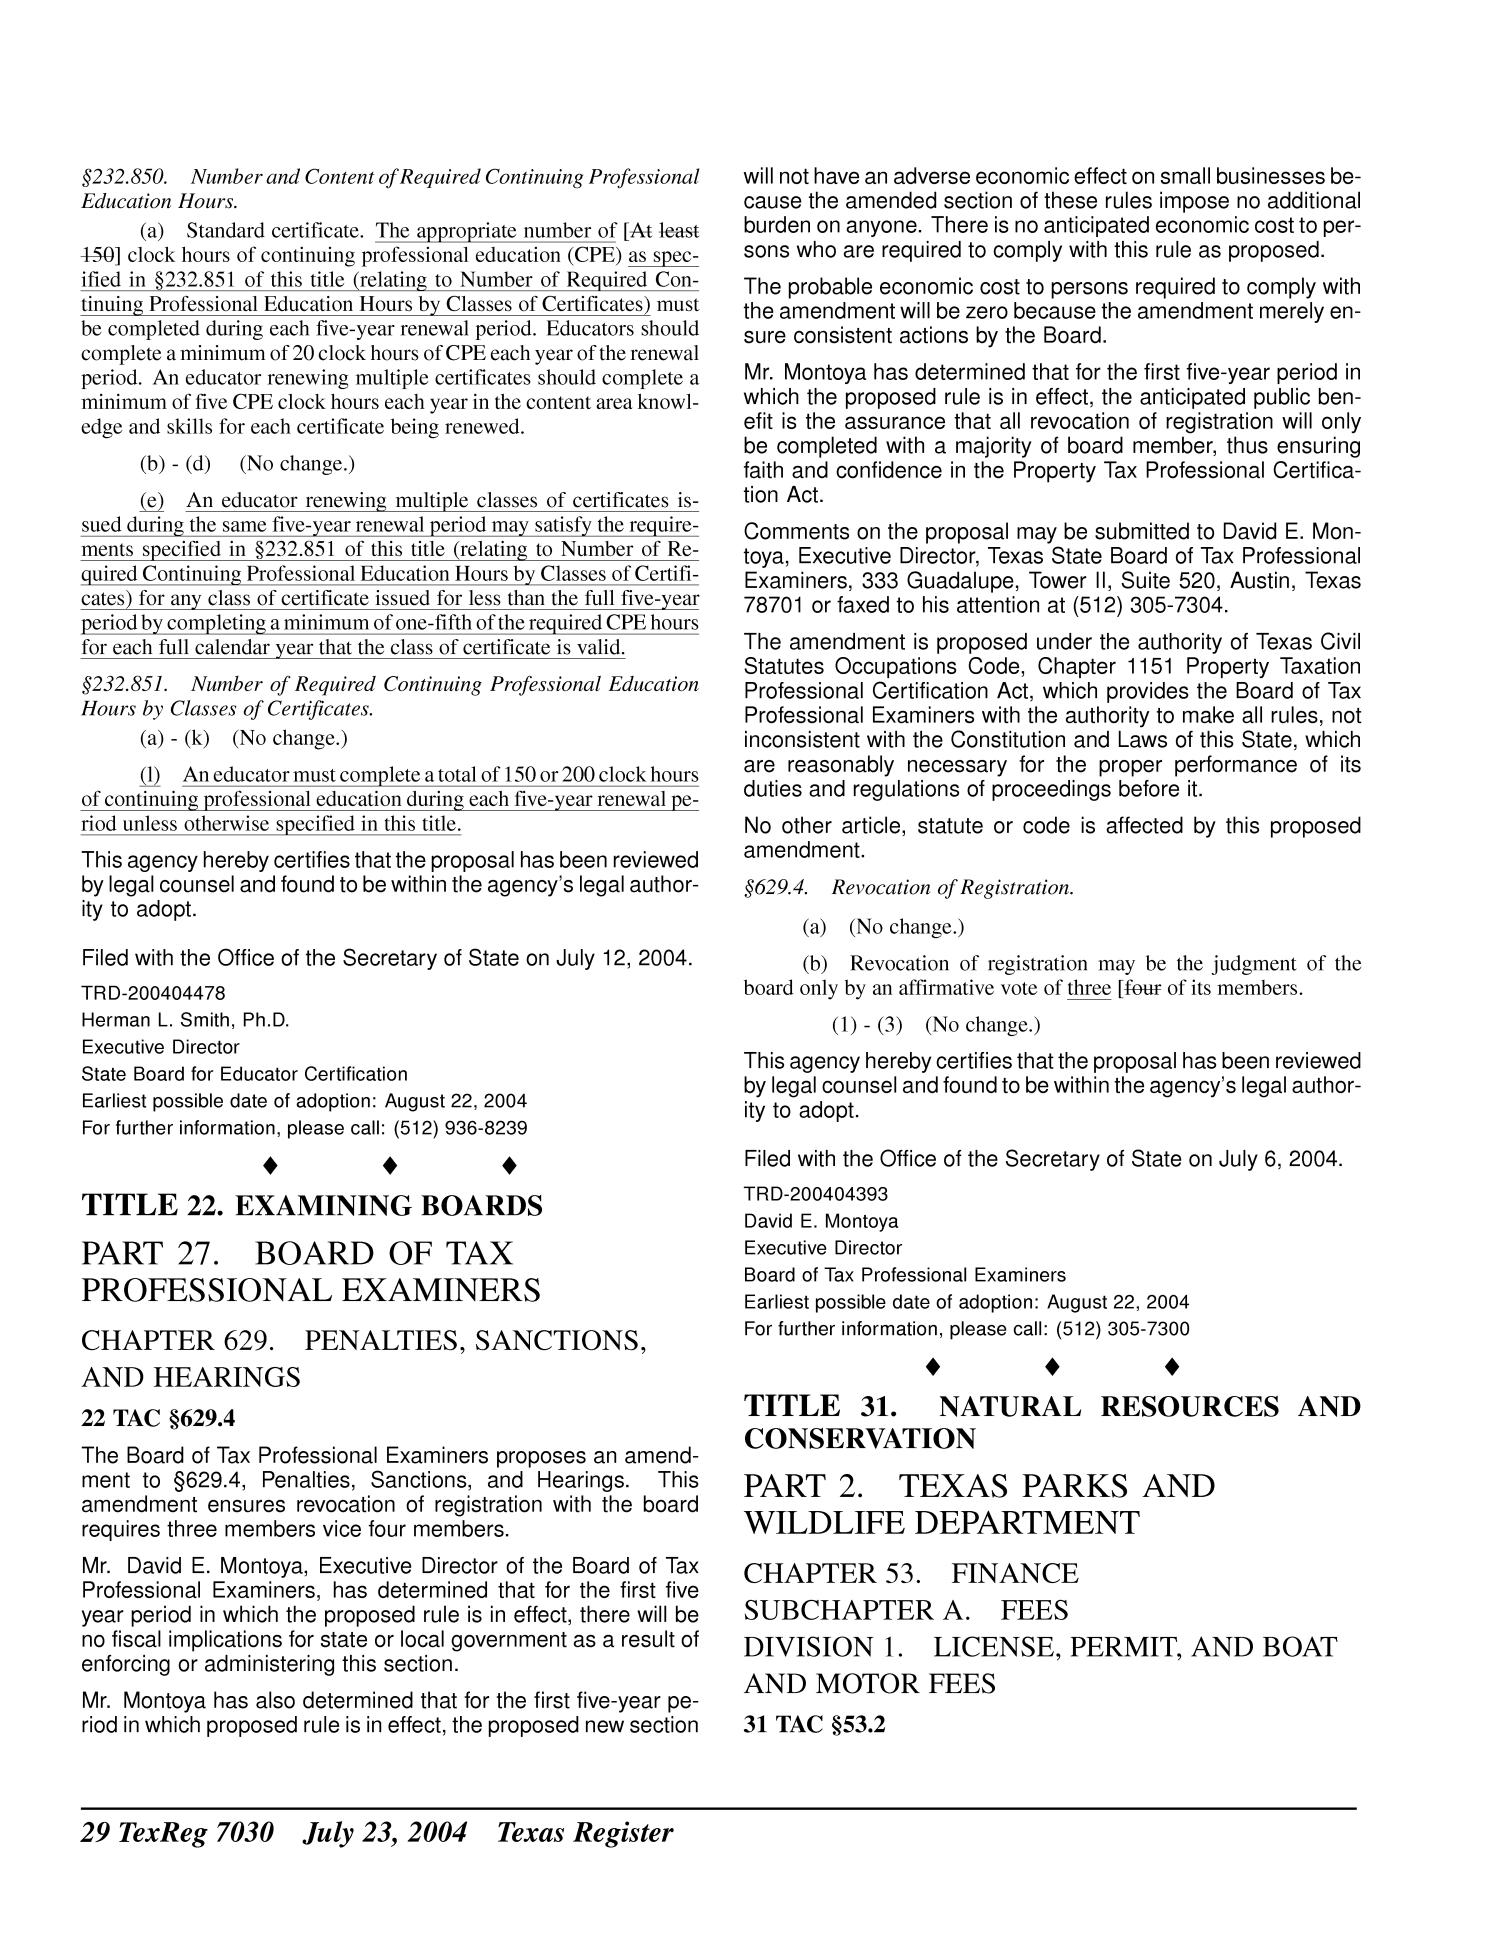 Texas Register, Volume 29, Number 30, Pages 7013-7230, July 23, 2004
                                                
                                                    7030
                                                